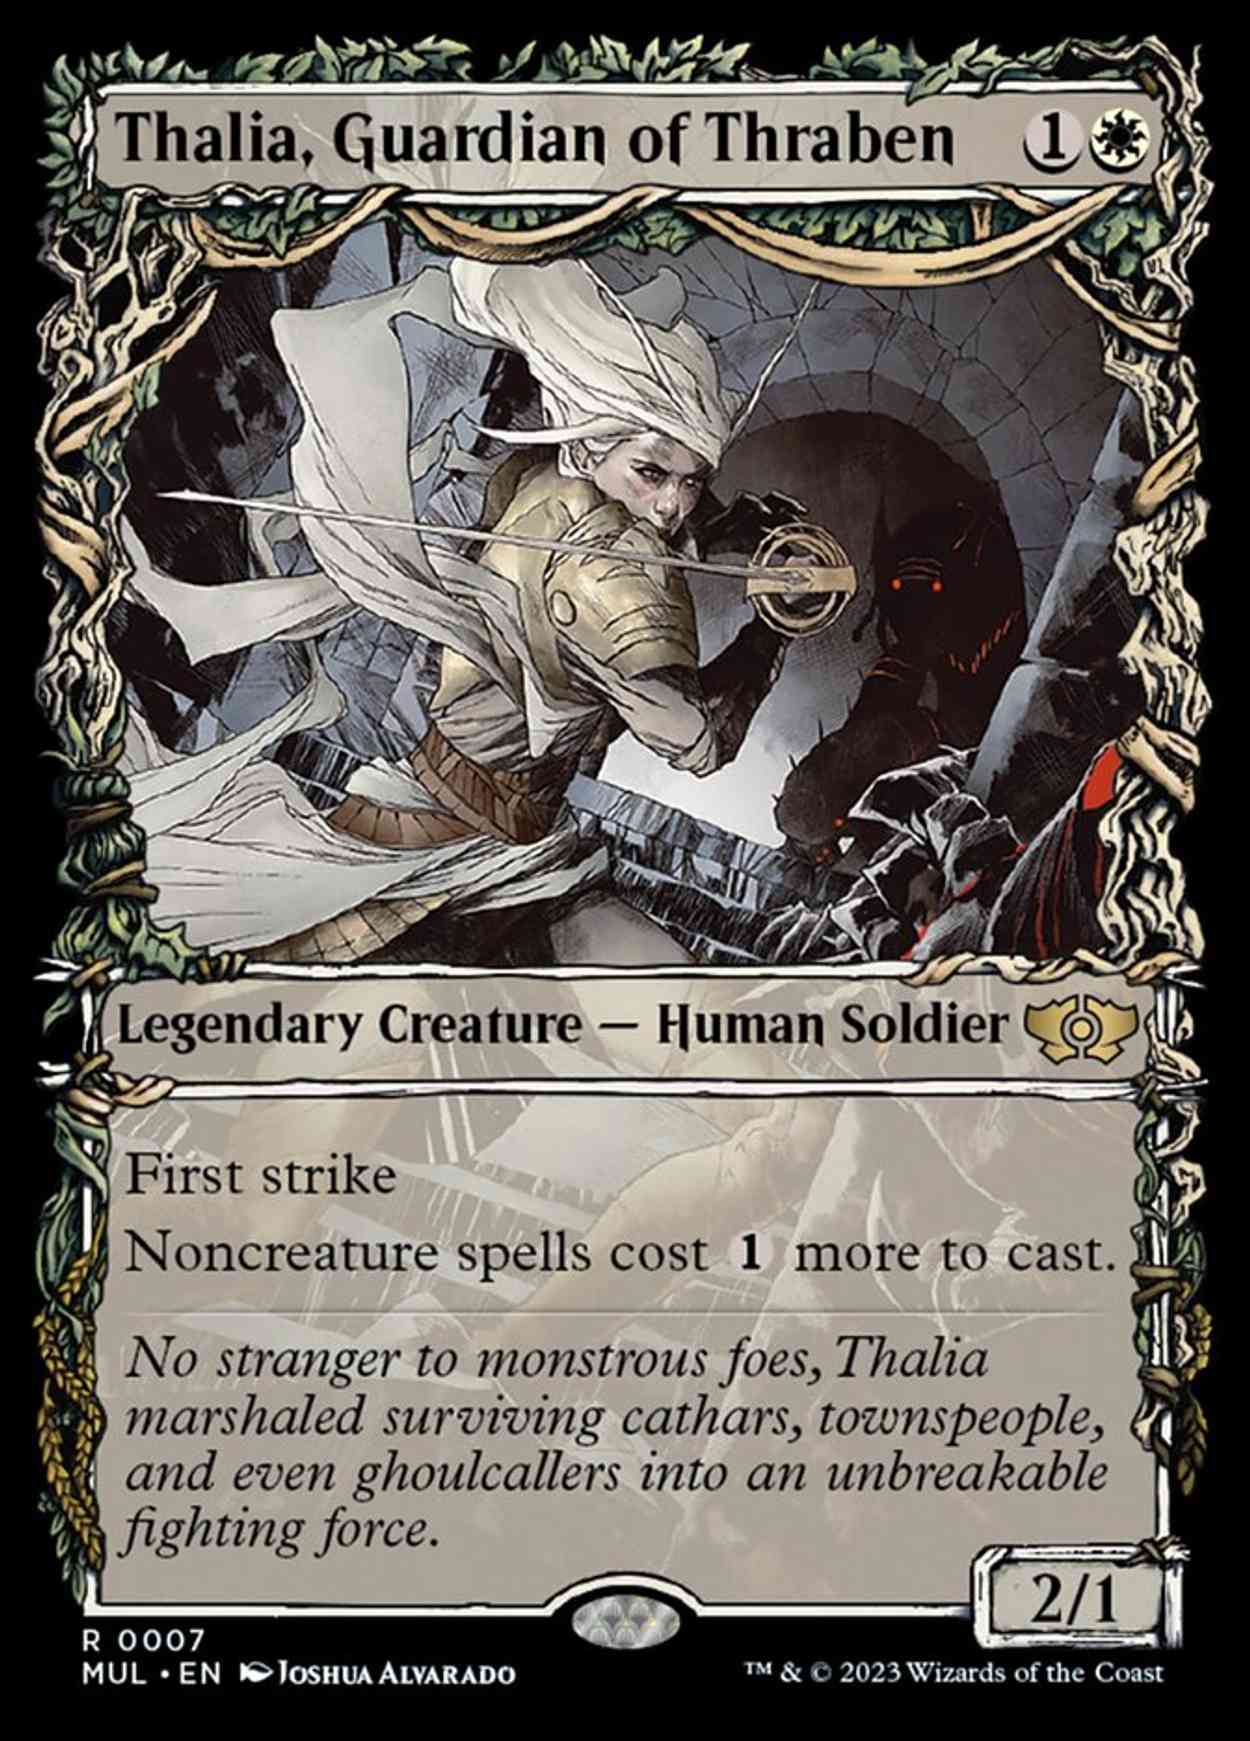 Thalia, Guardian of Thraben magic card front